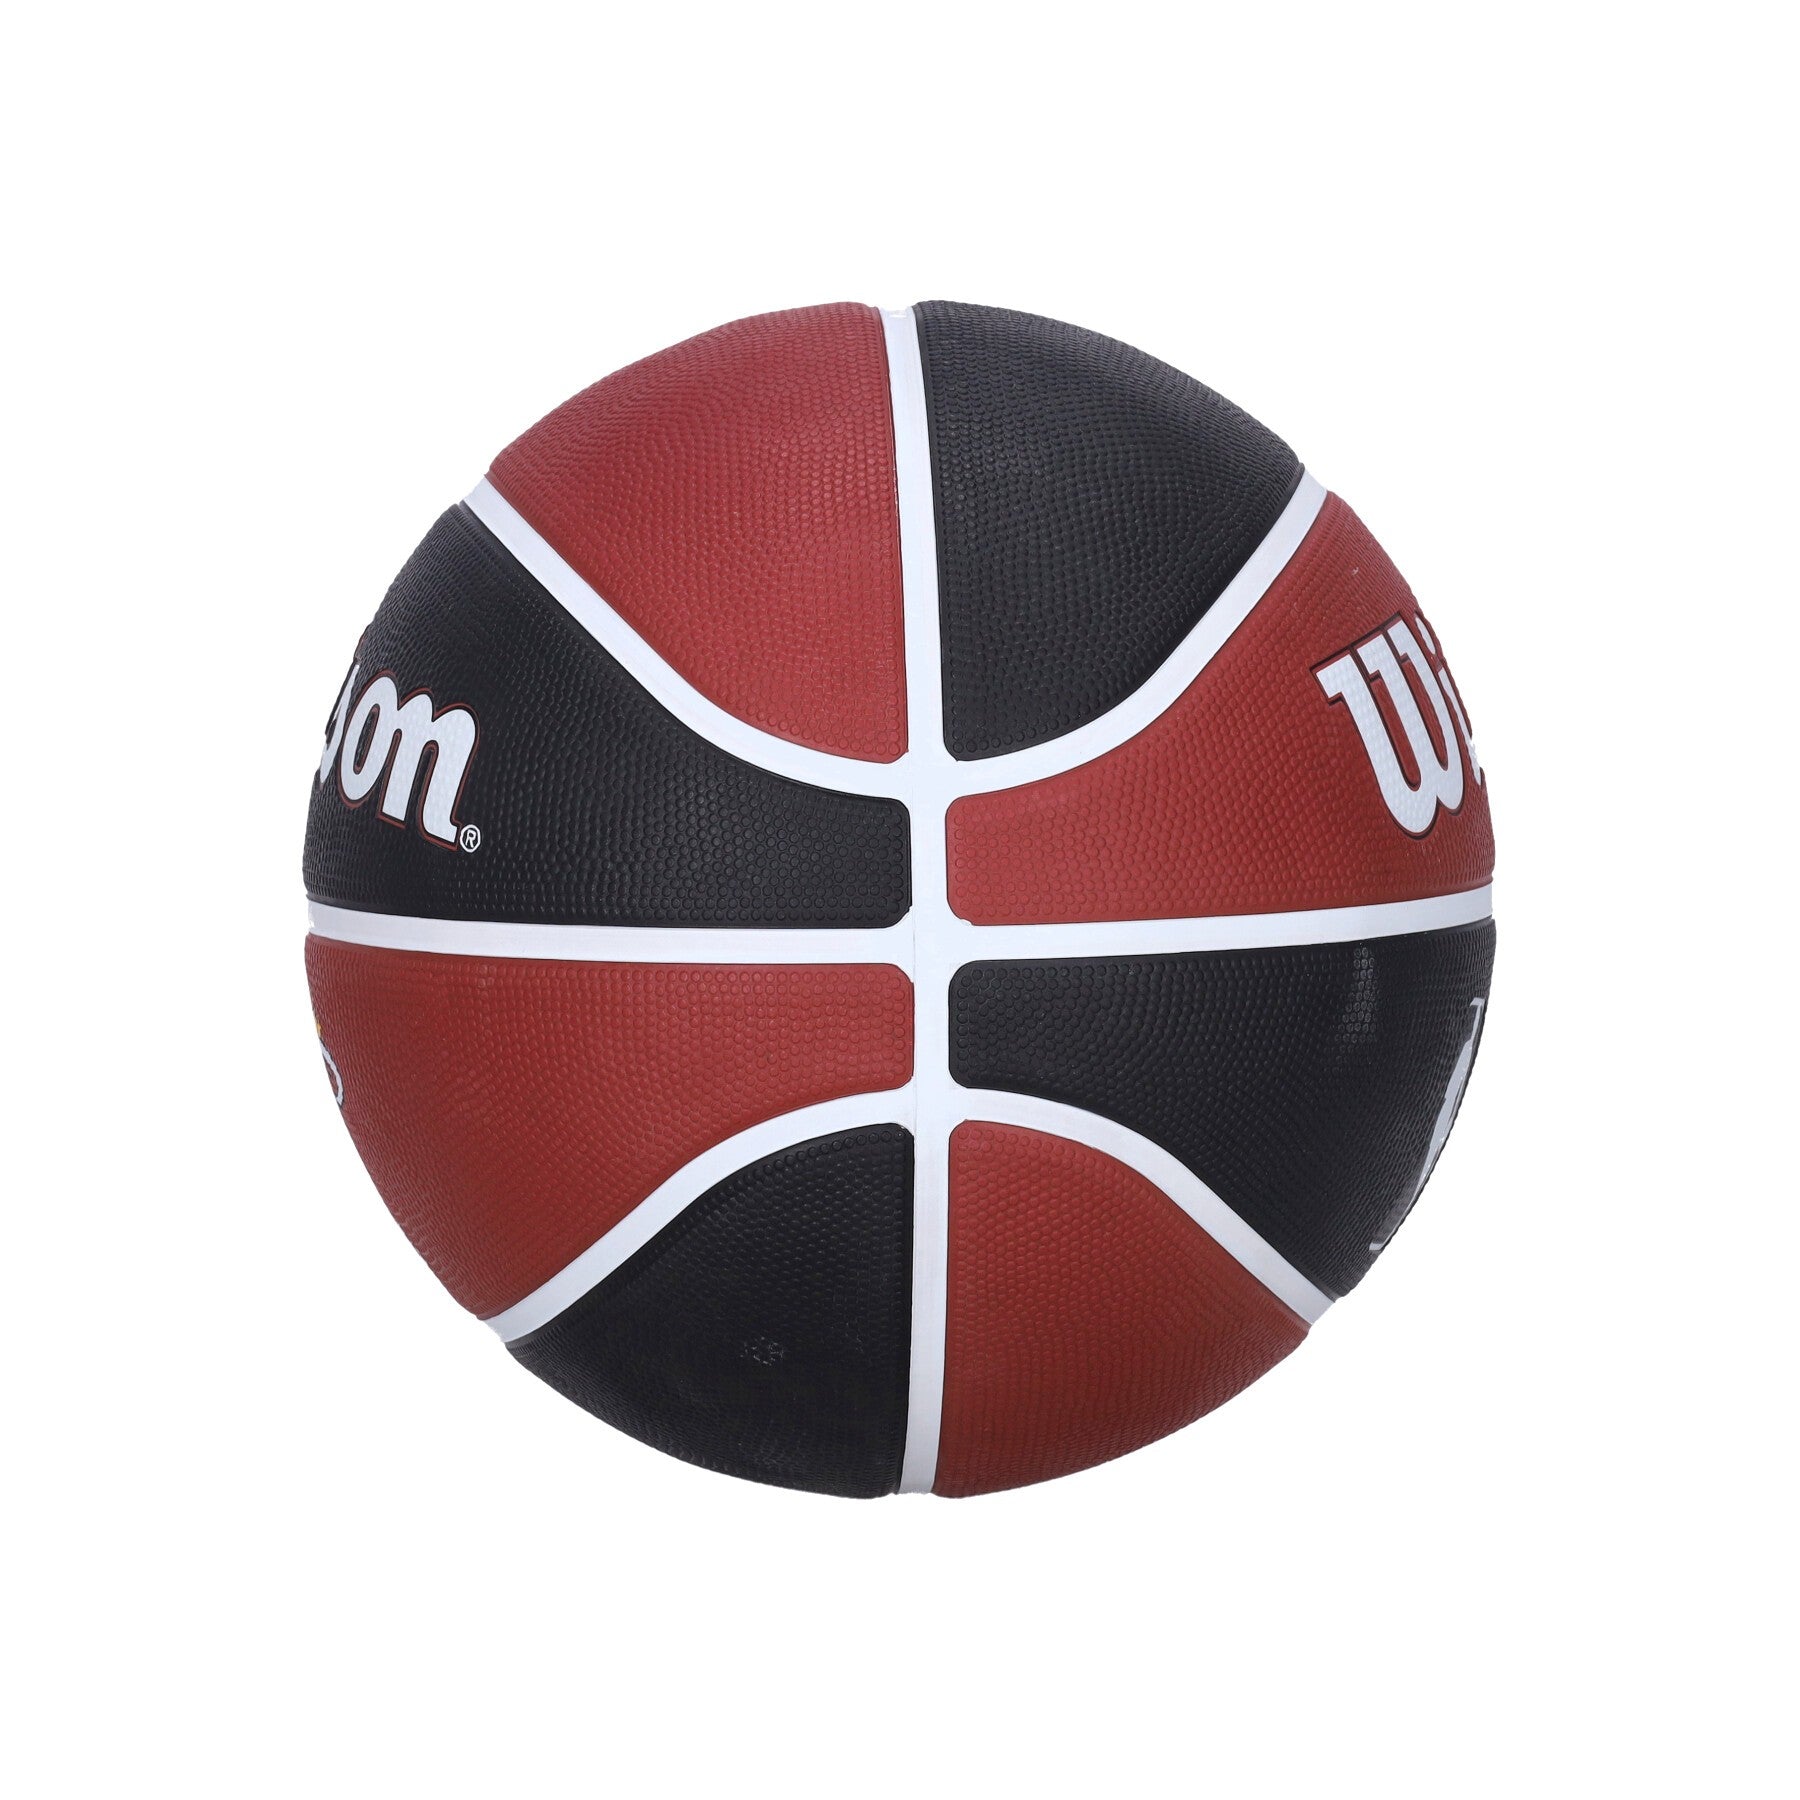 Men's NBA Team Tribute Basketball Size 7 Miahea